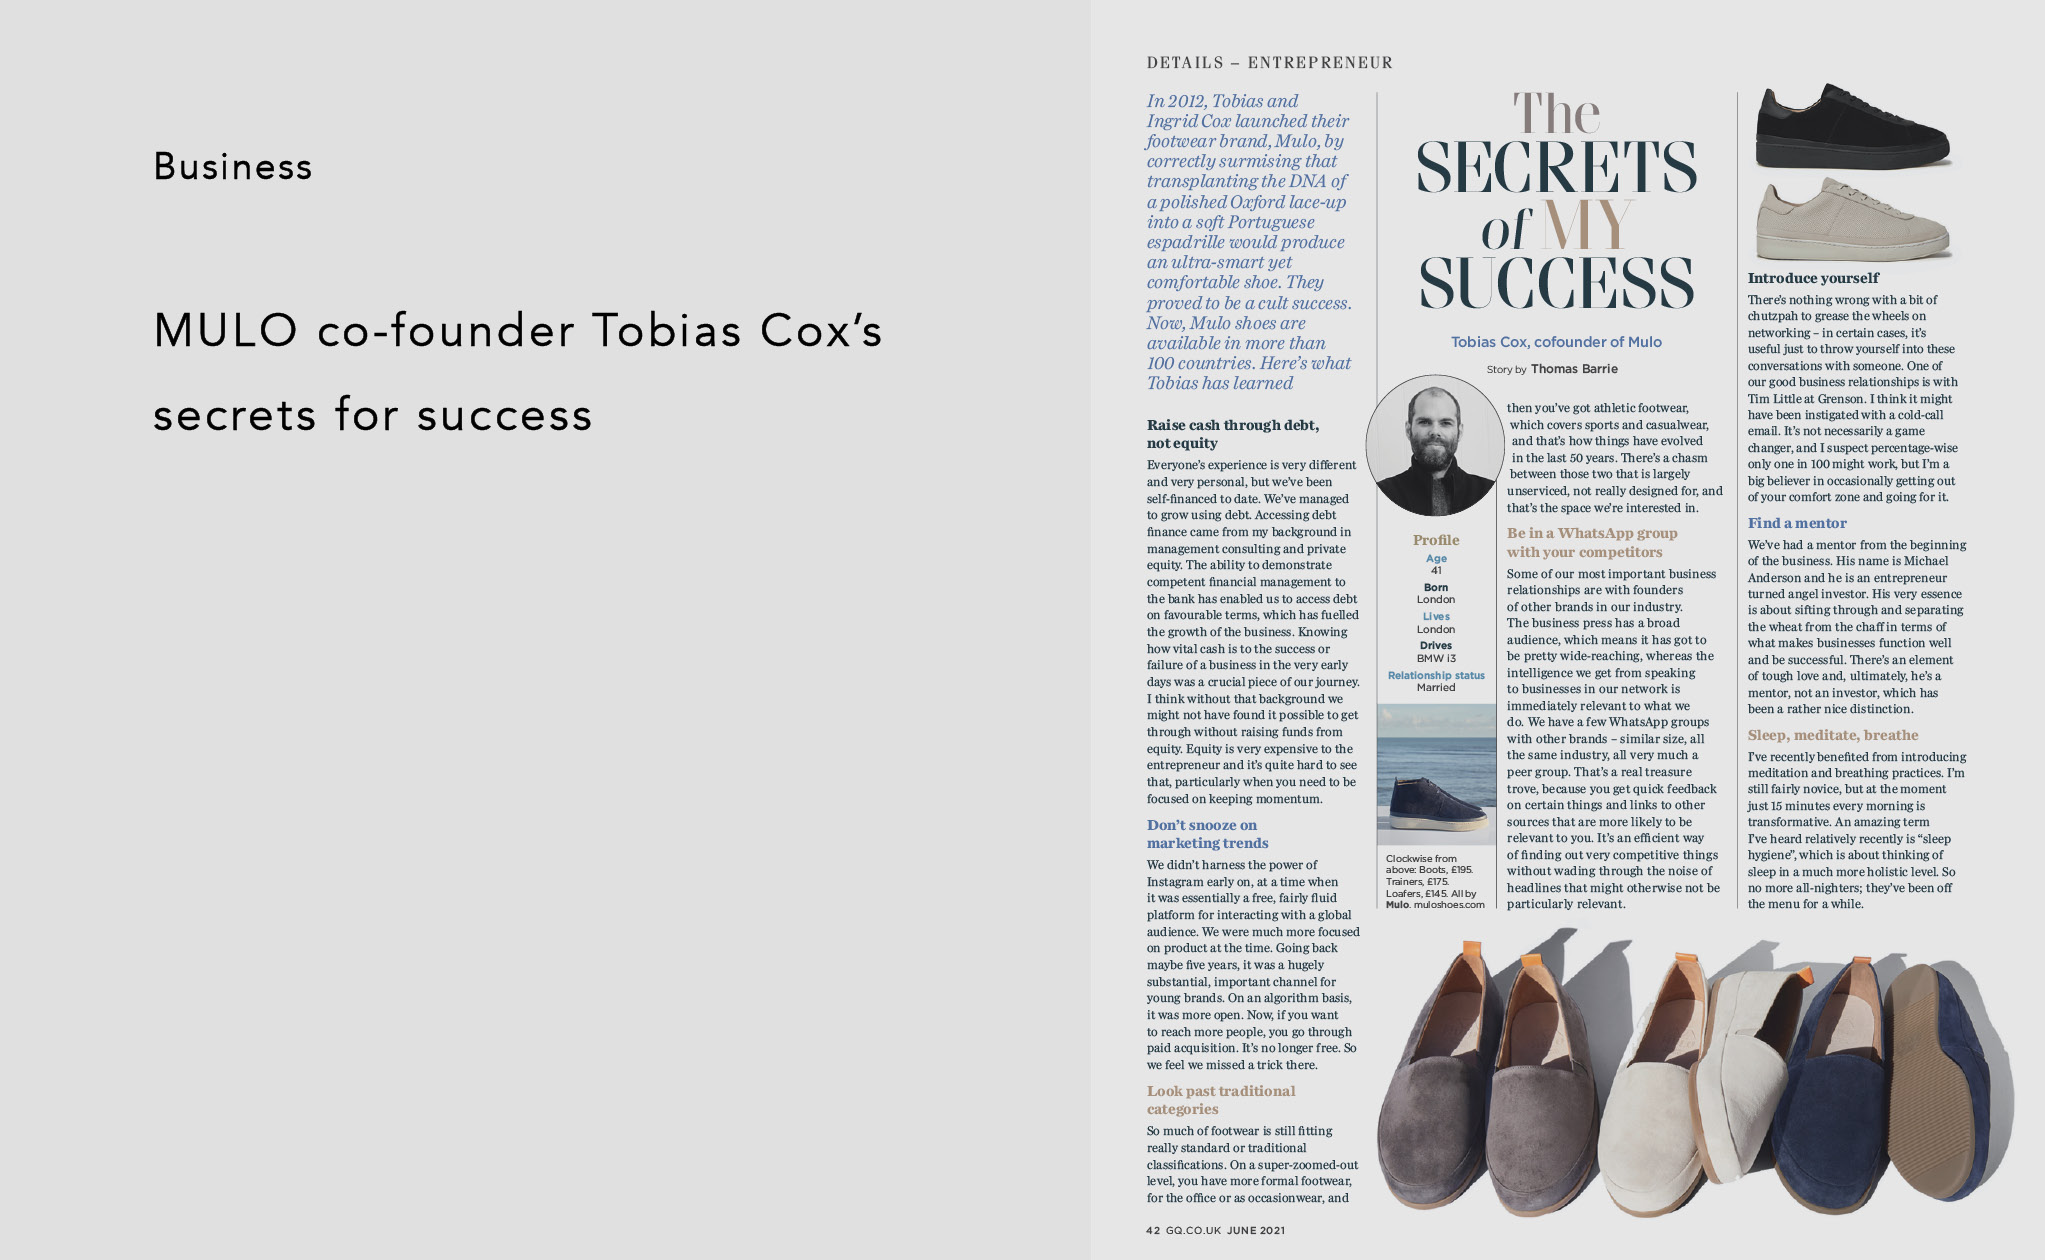 GQ - MULO co-founder Tobias Cox's secrets for success